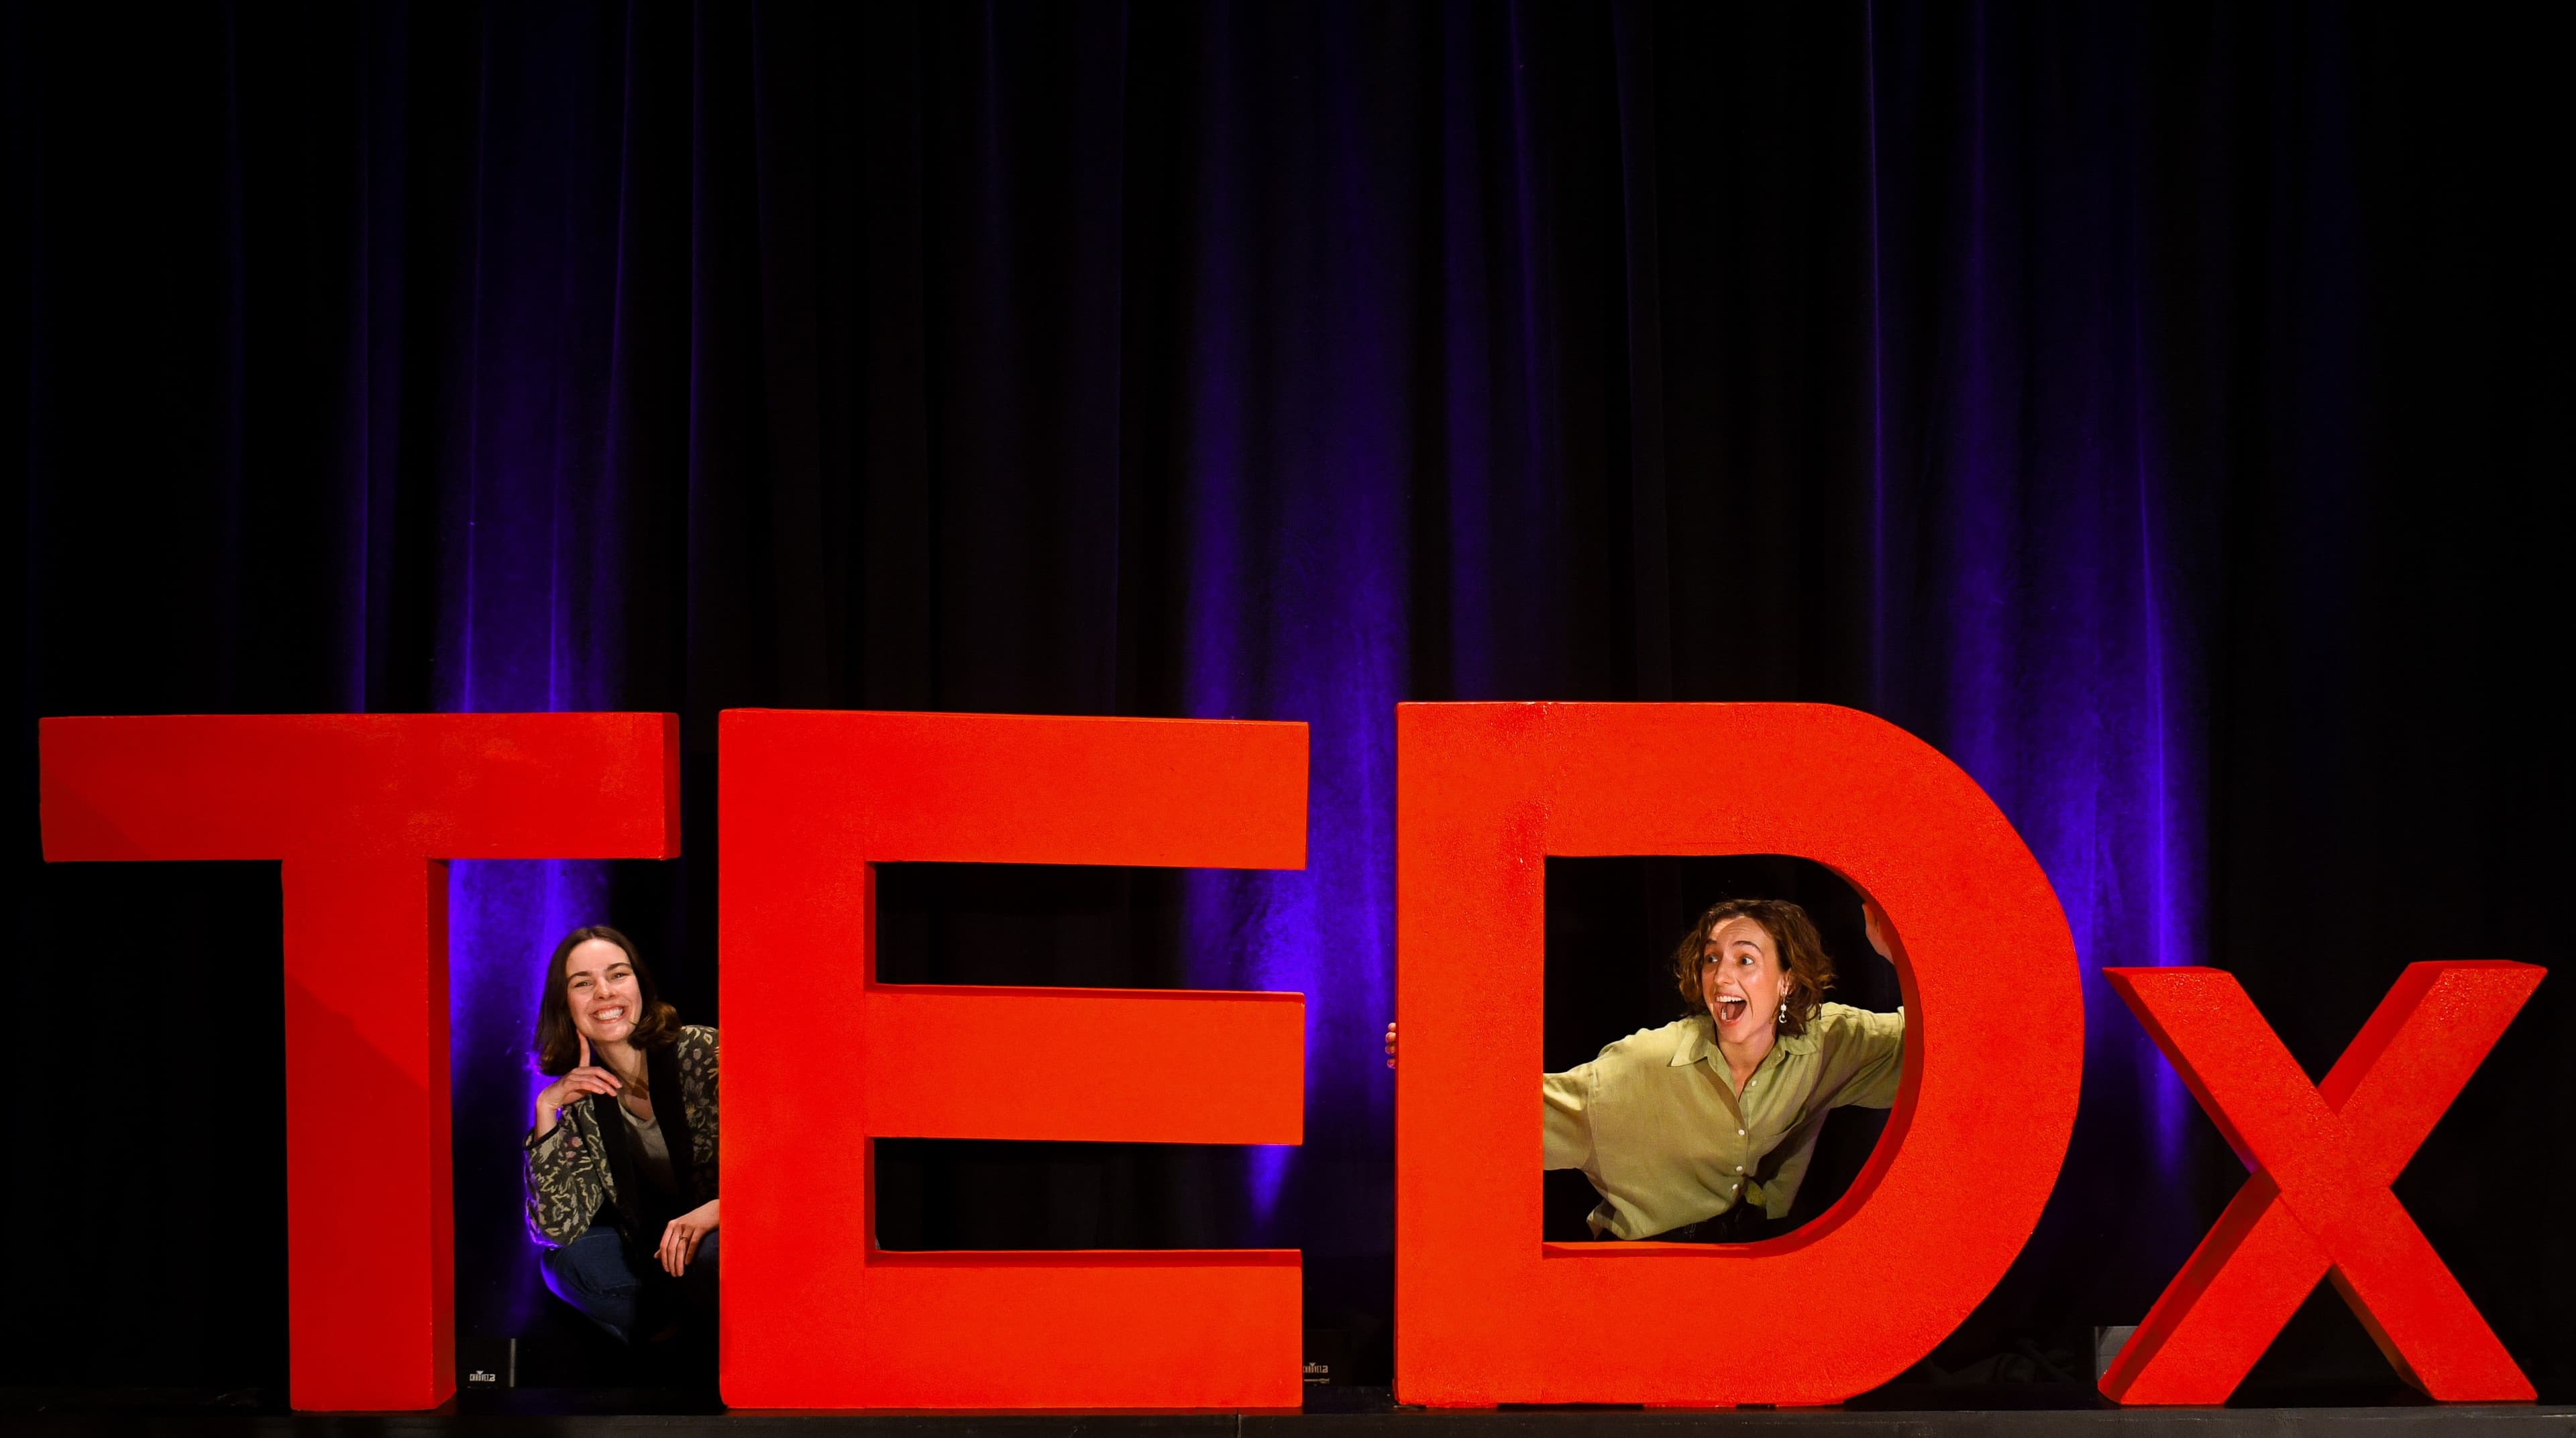 Jillian and Masha posing with TEDx letters